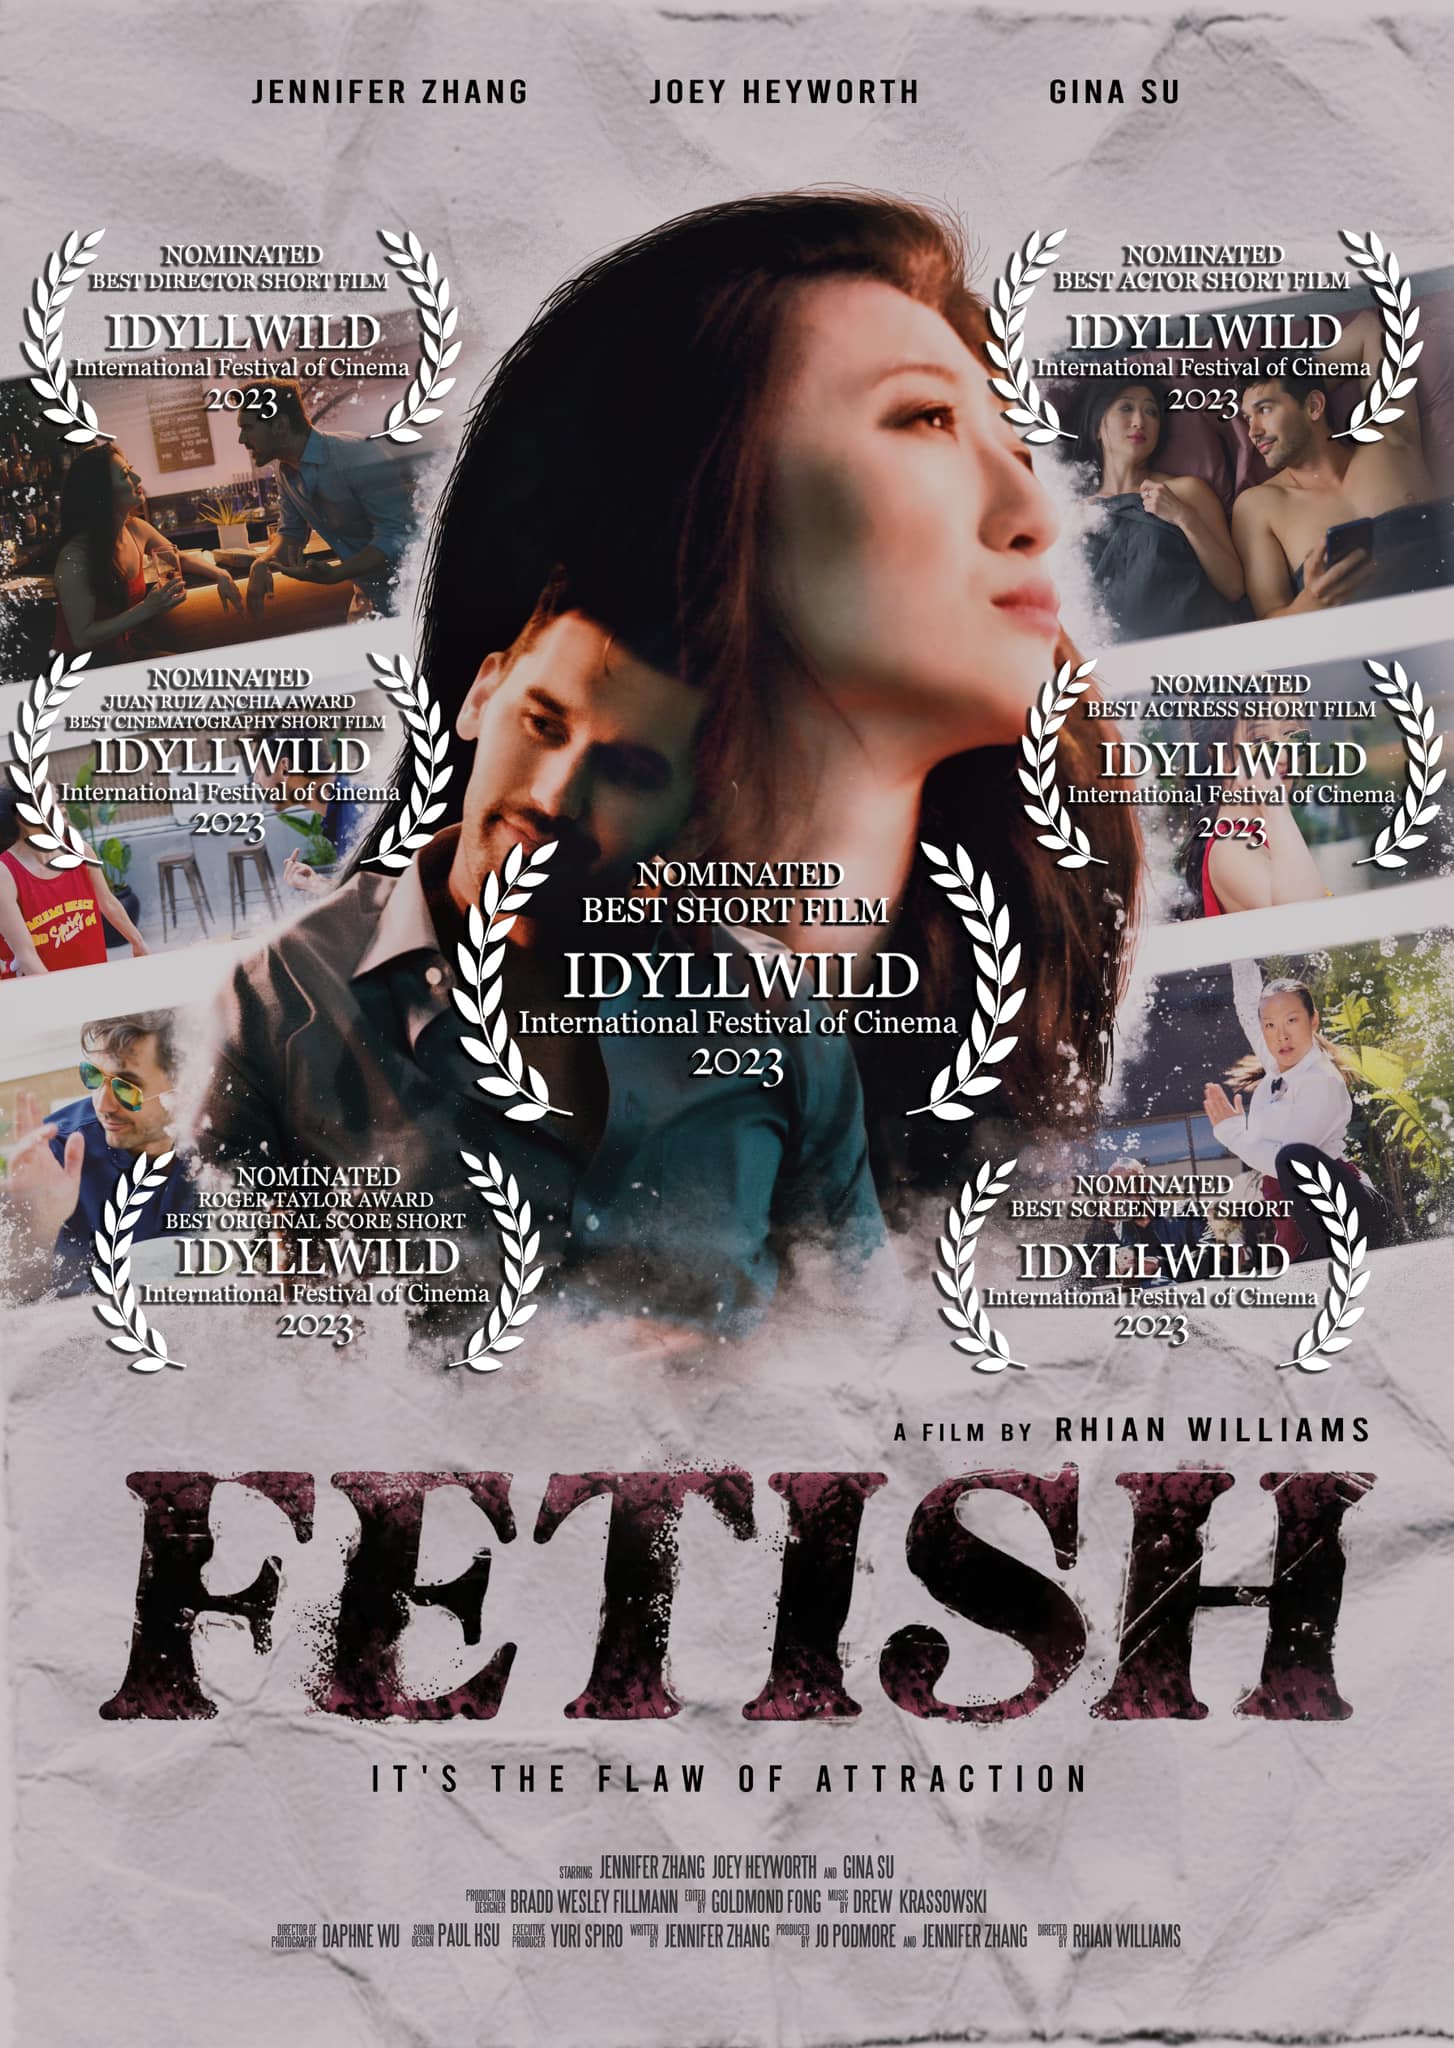 Fetish, an Oscar-qualified short comedy starring Jennifer Zhang